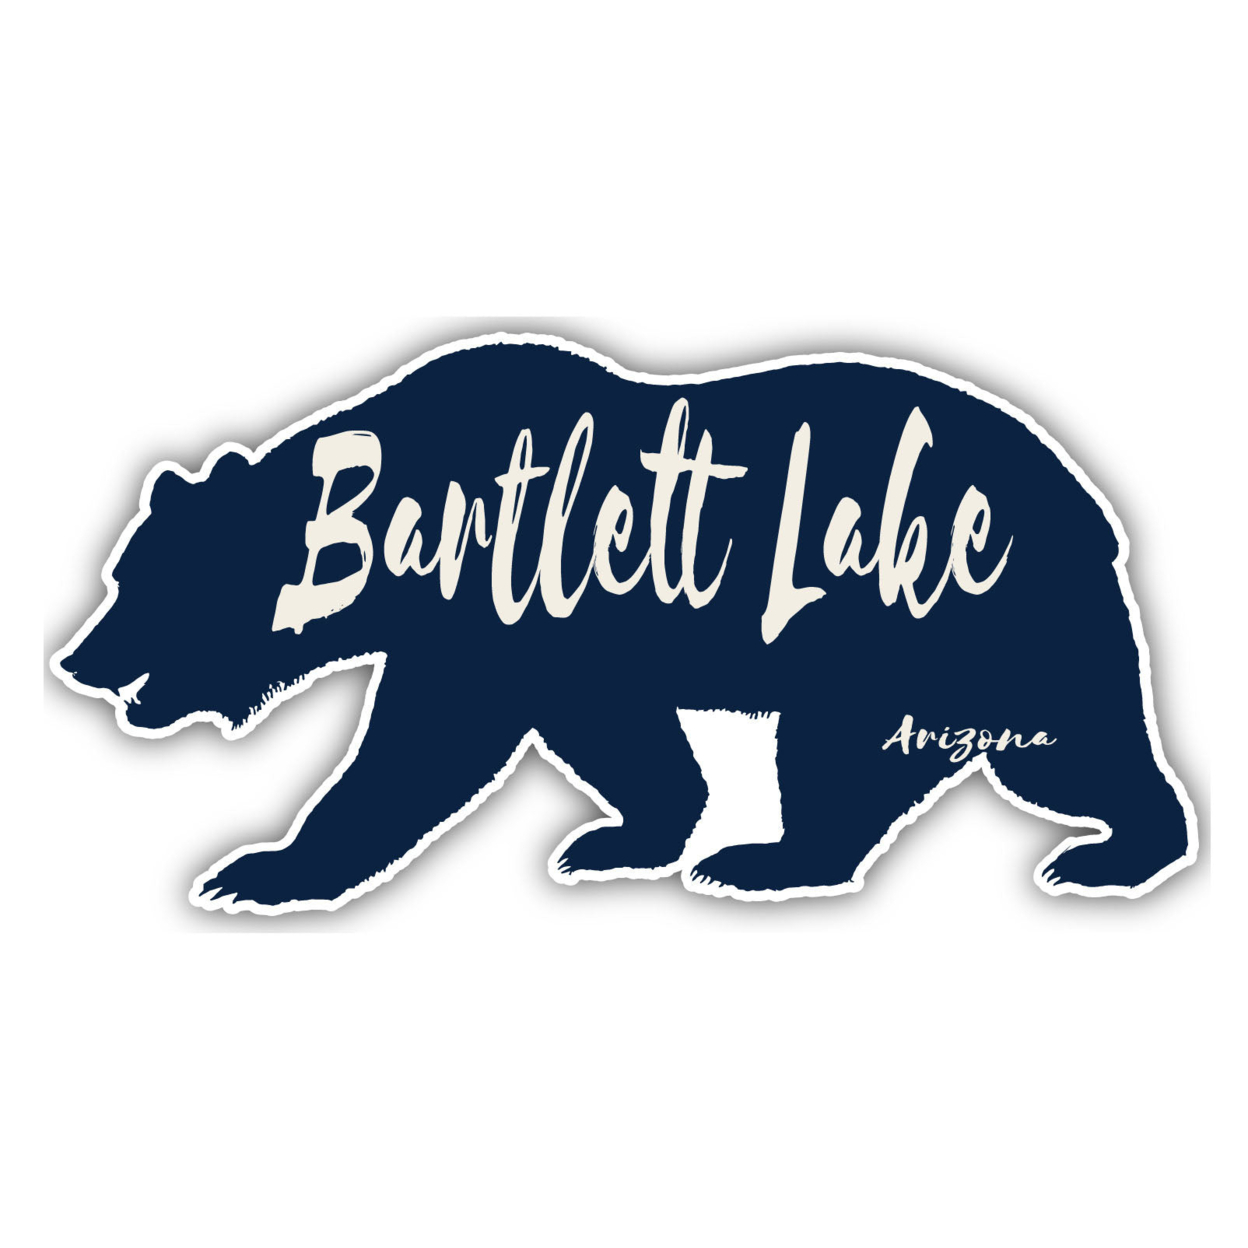 Bartlett Lake Arizona Souvenir Decorative Stickers (Choose Theme And Size) - 4-Pack, 4-Inch, Camp Life